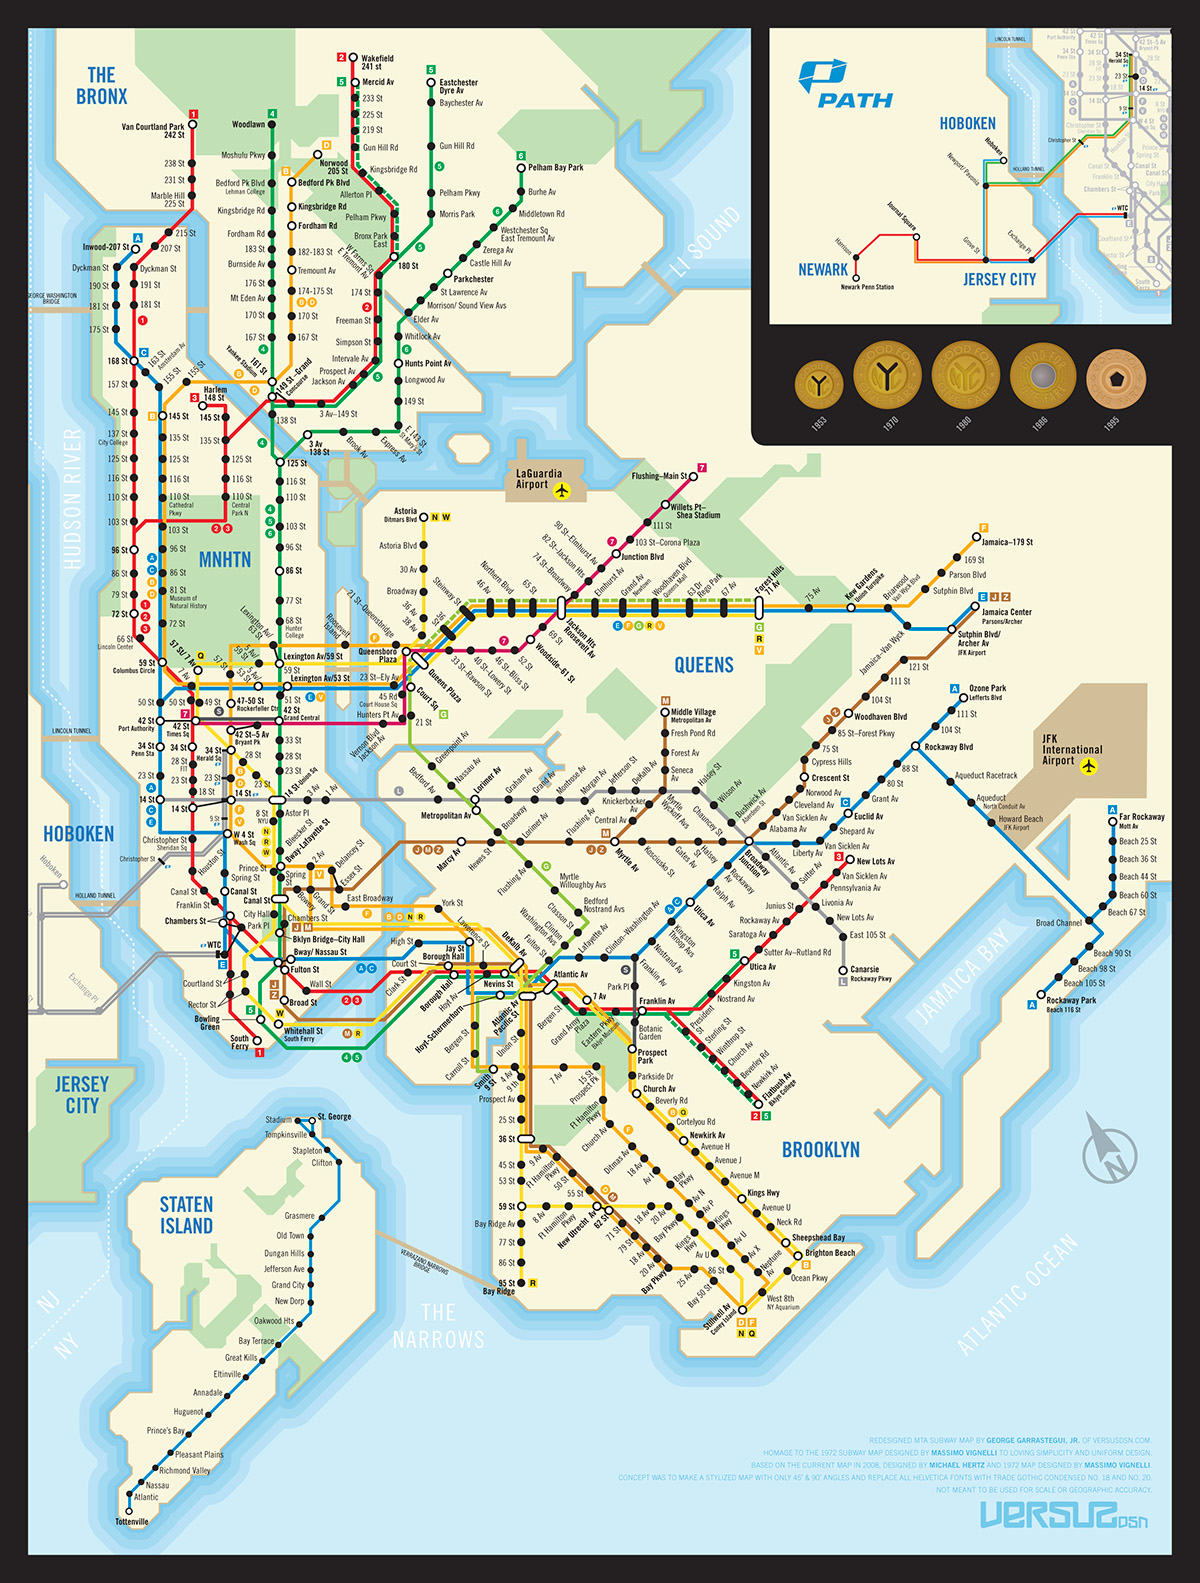 design New York subway  Map  redesign  modern  vignelli  hertz  mta